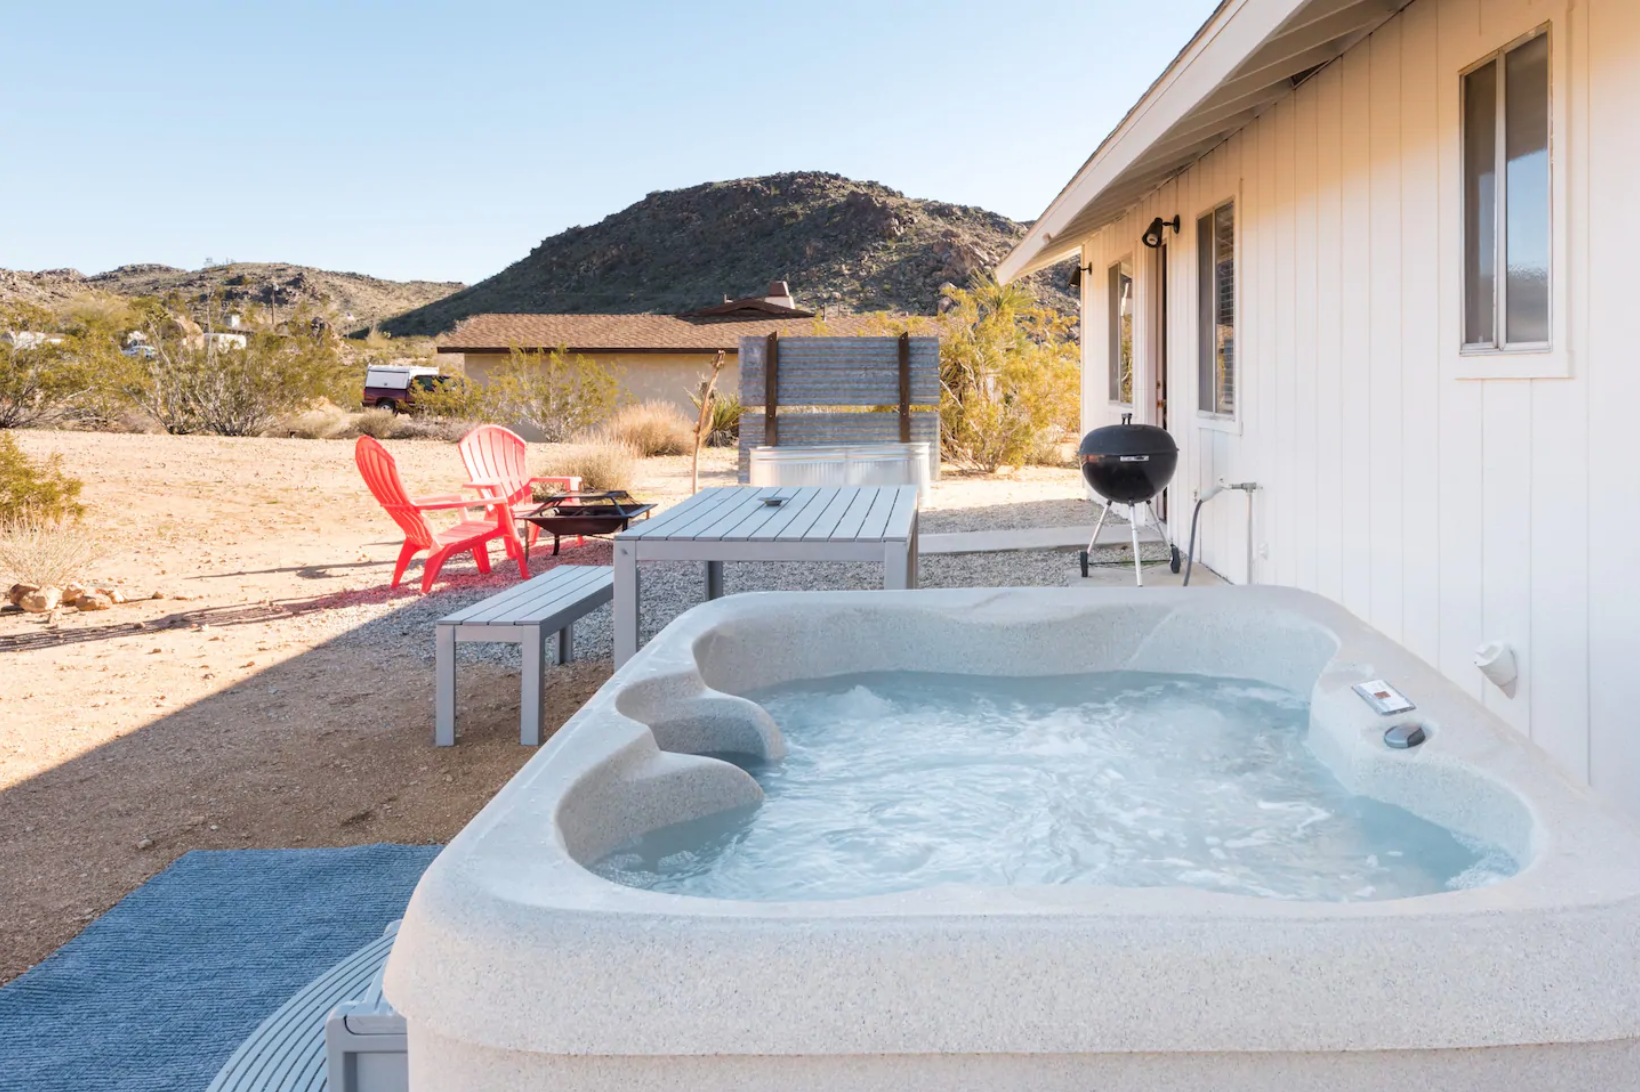 Joshua Tree Airbnb with hot tub